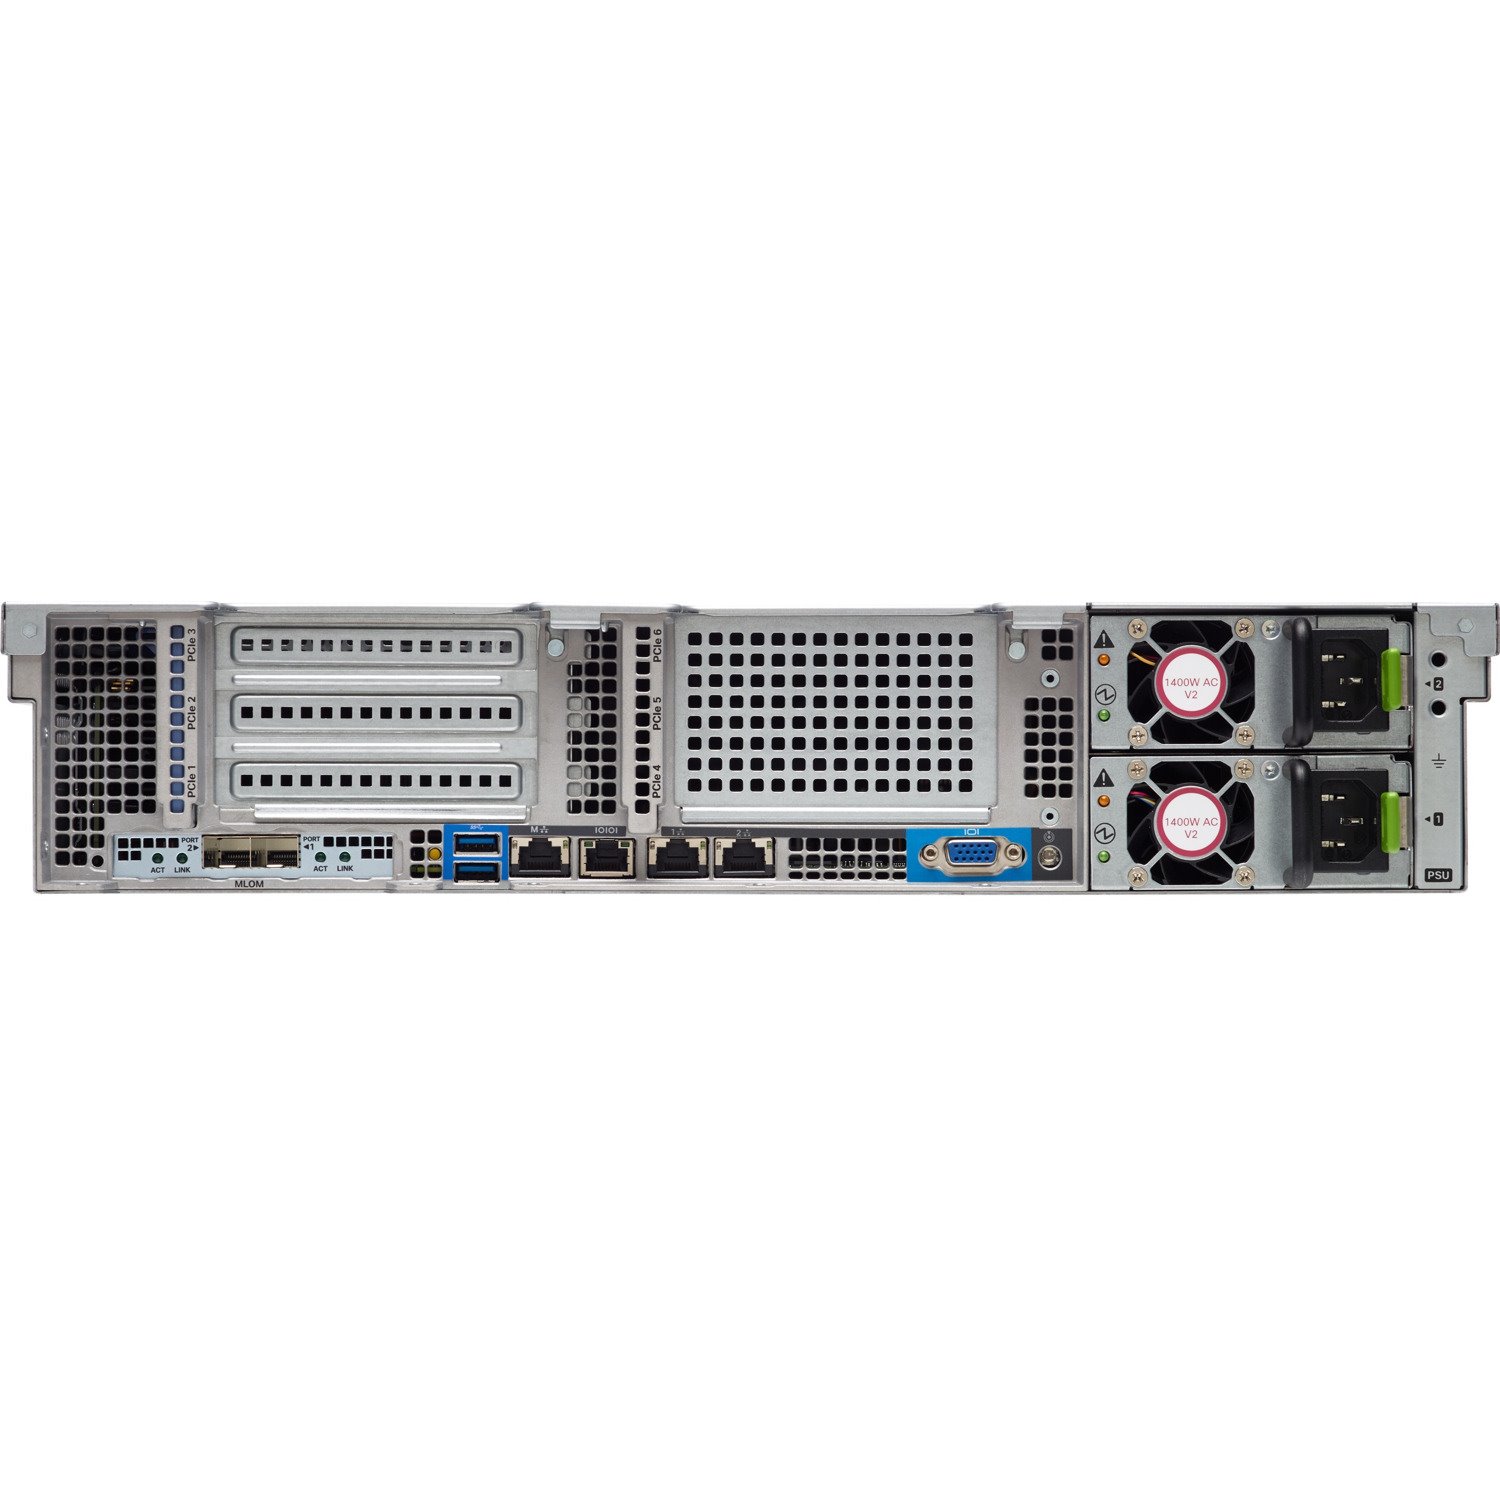 Cisco HyperFlex HX240c M4 2U Rack Server - 2 x Intel Xeon E5-2660 v3 2.60 GHz - 384 GB RAM - 12Gb/s SAS Controller